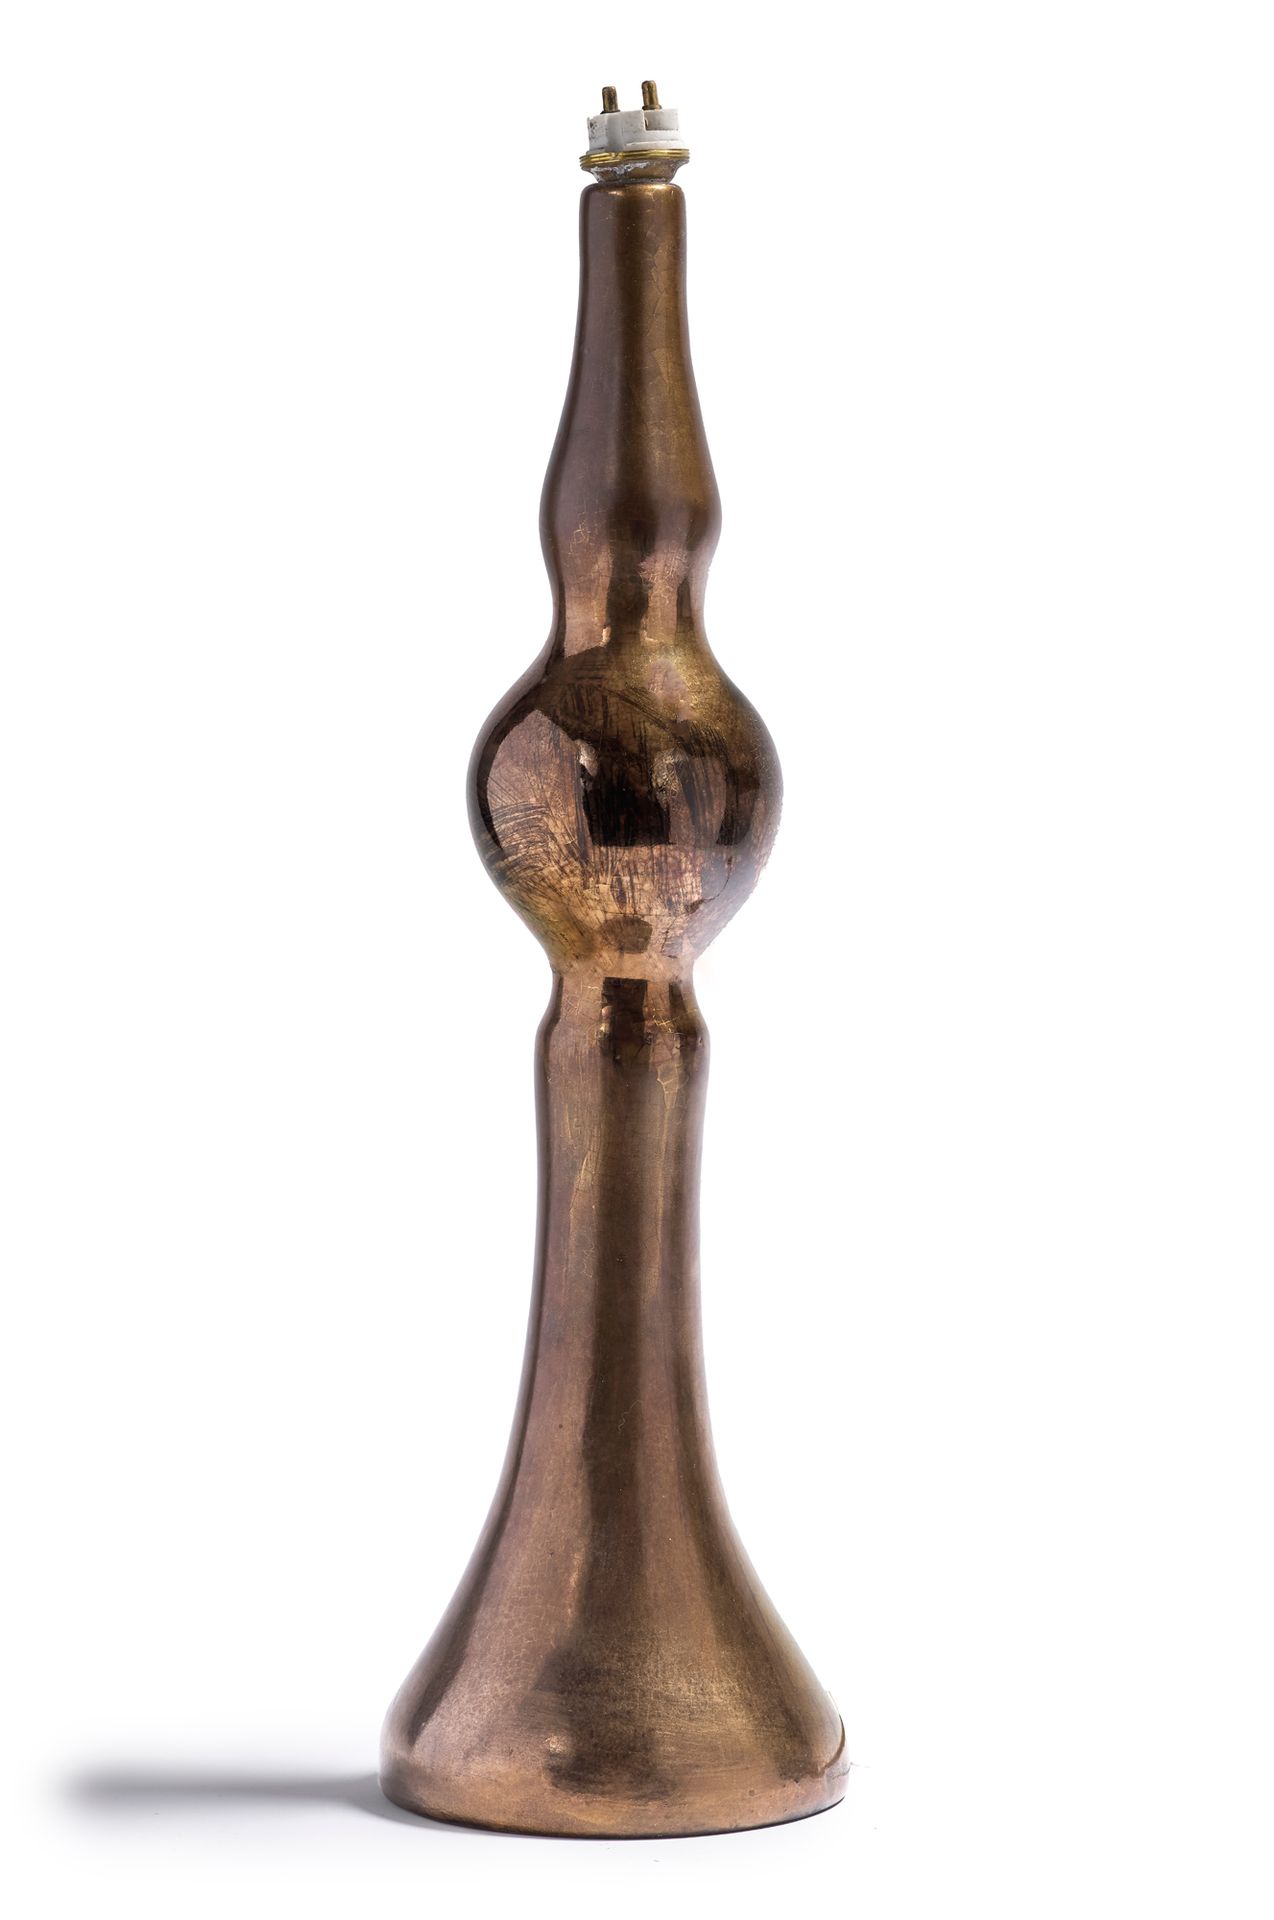 DENISE GATARD (1921-1992) 


金色和铜色釉面的陶瓷灯



签名为 "DG "的首字母



约1960年



高：42.5厘米
&hellip;